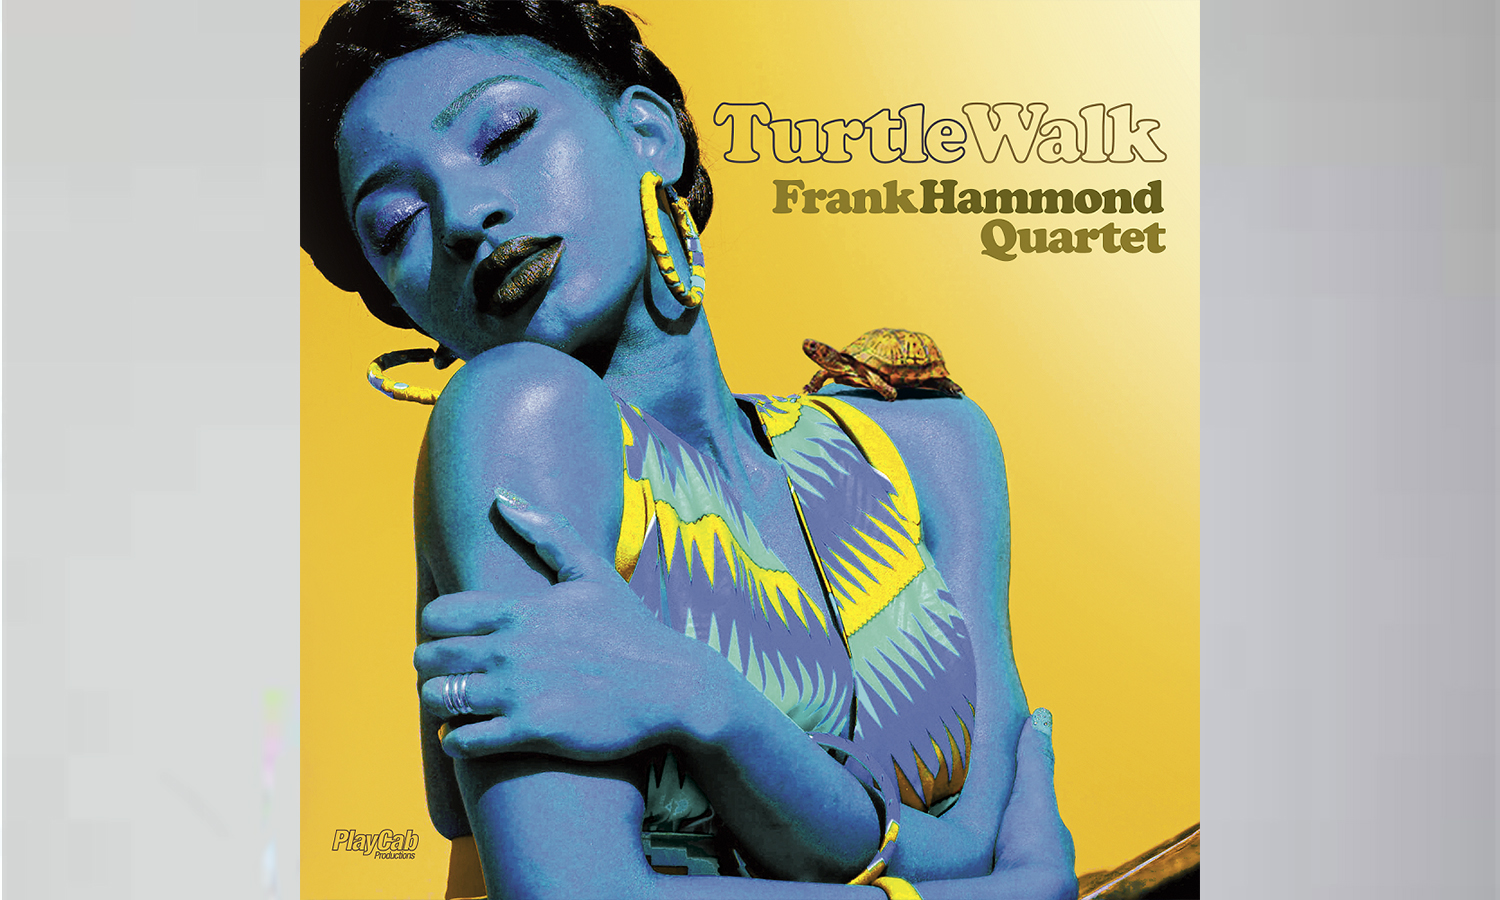 Frank Hammond